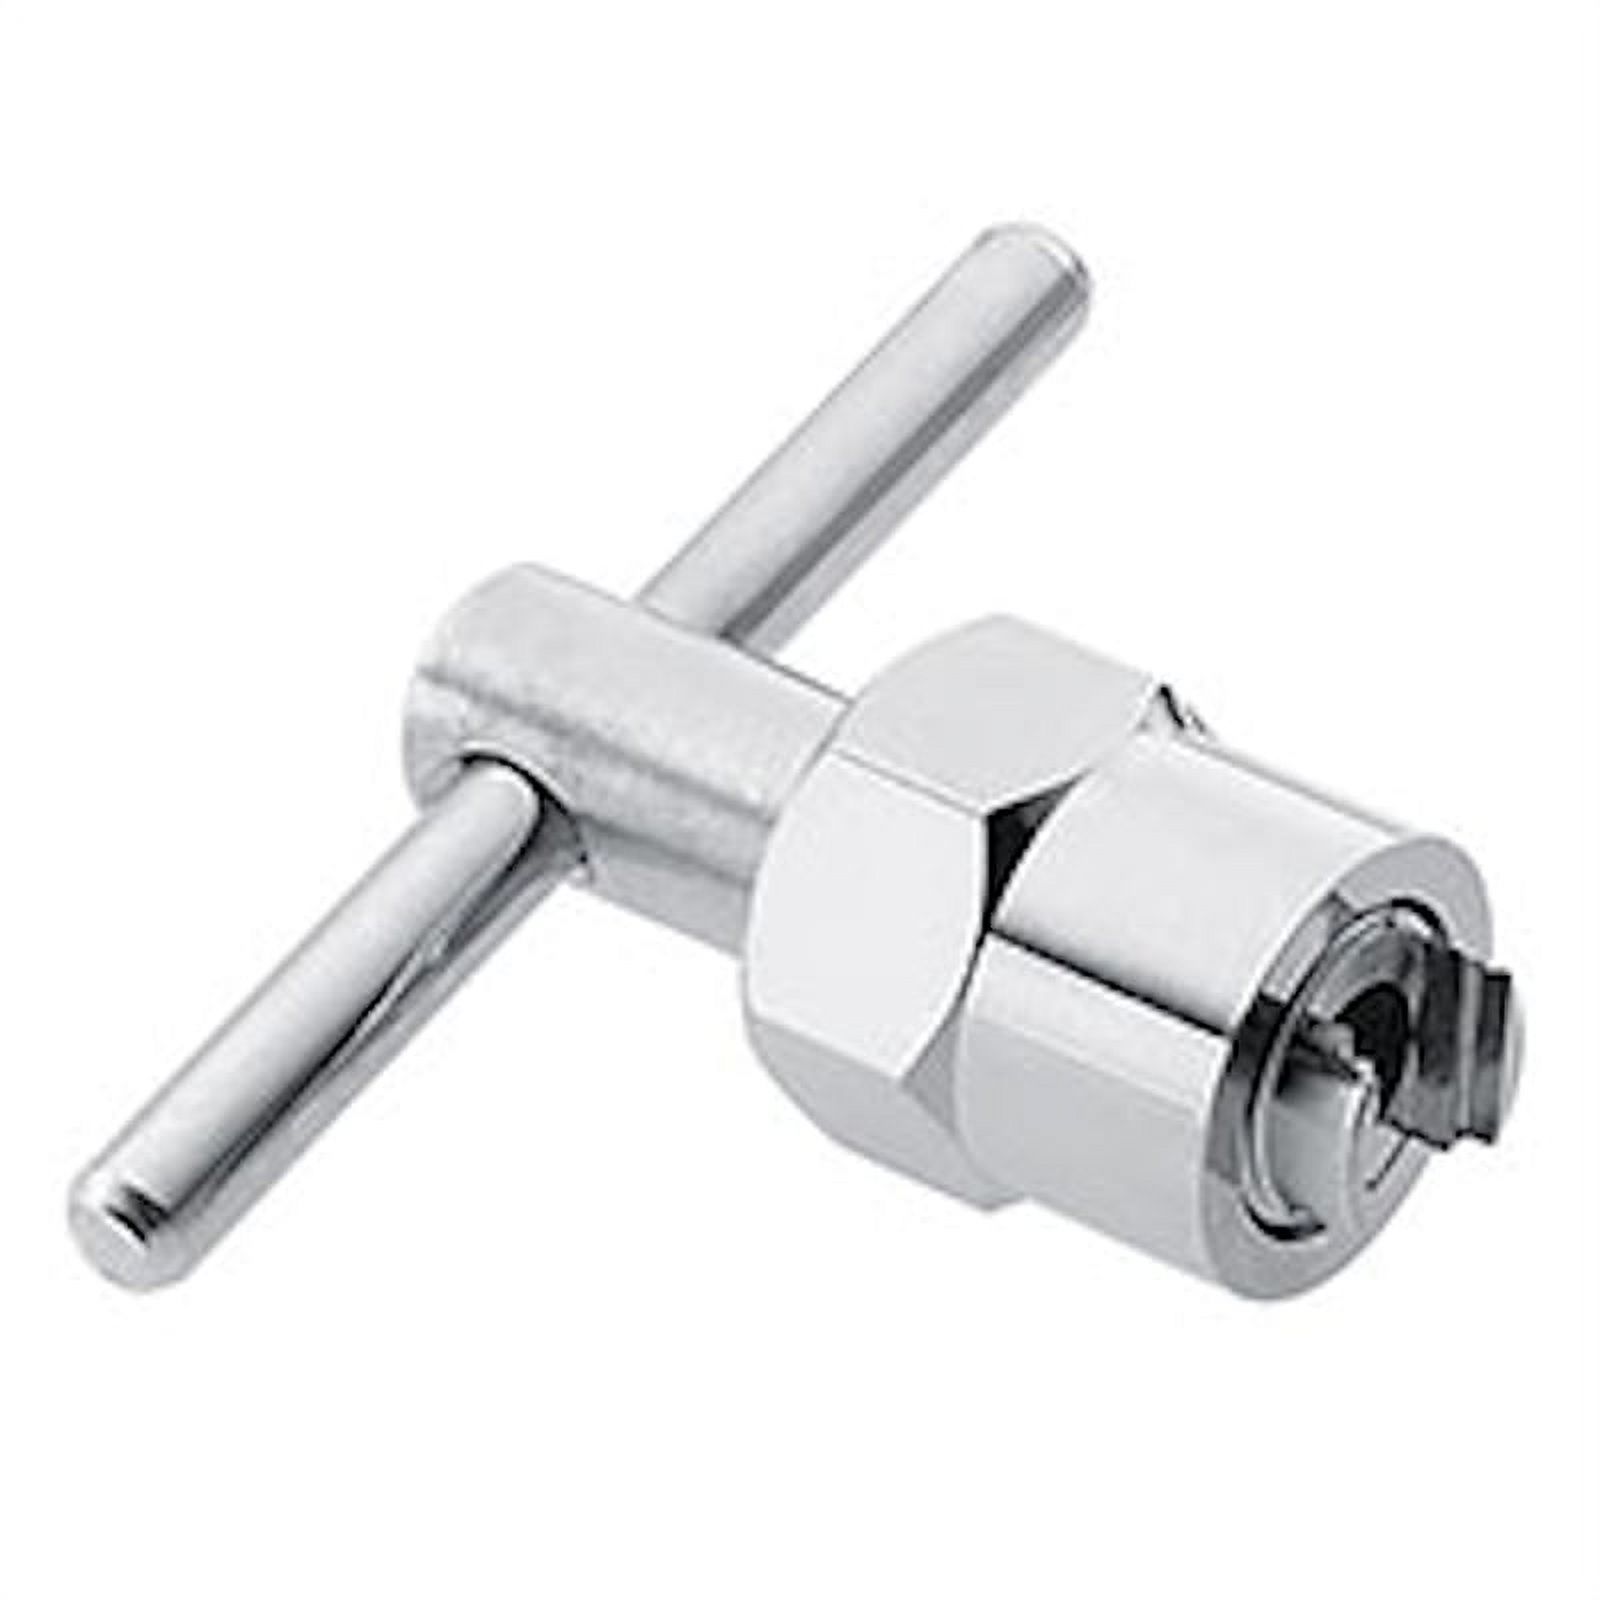 Moen 104421 Faucet Cartridge Puller - image 2 of 2